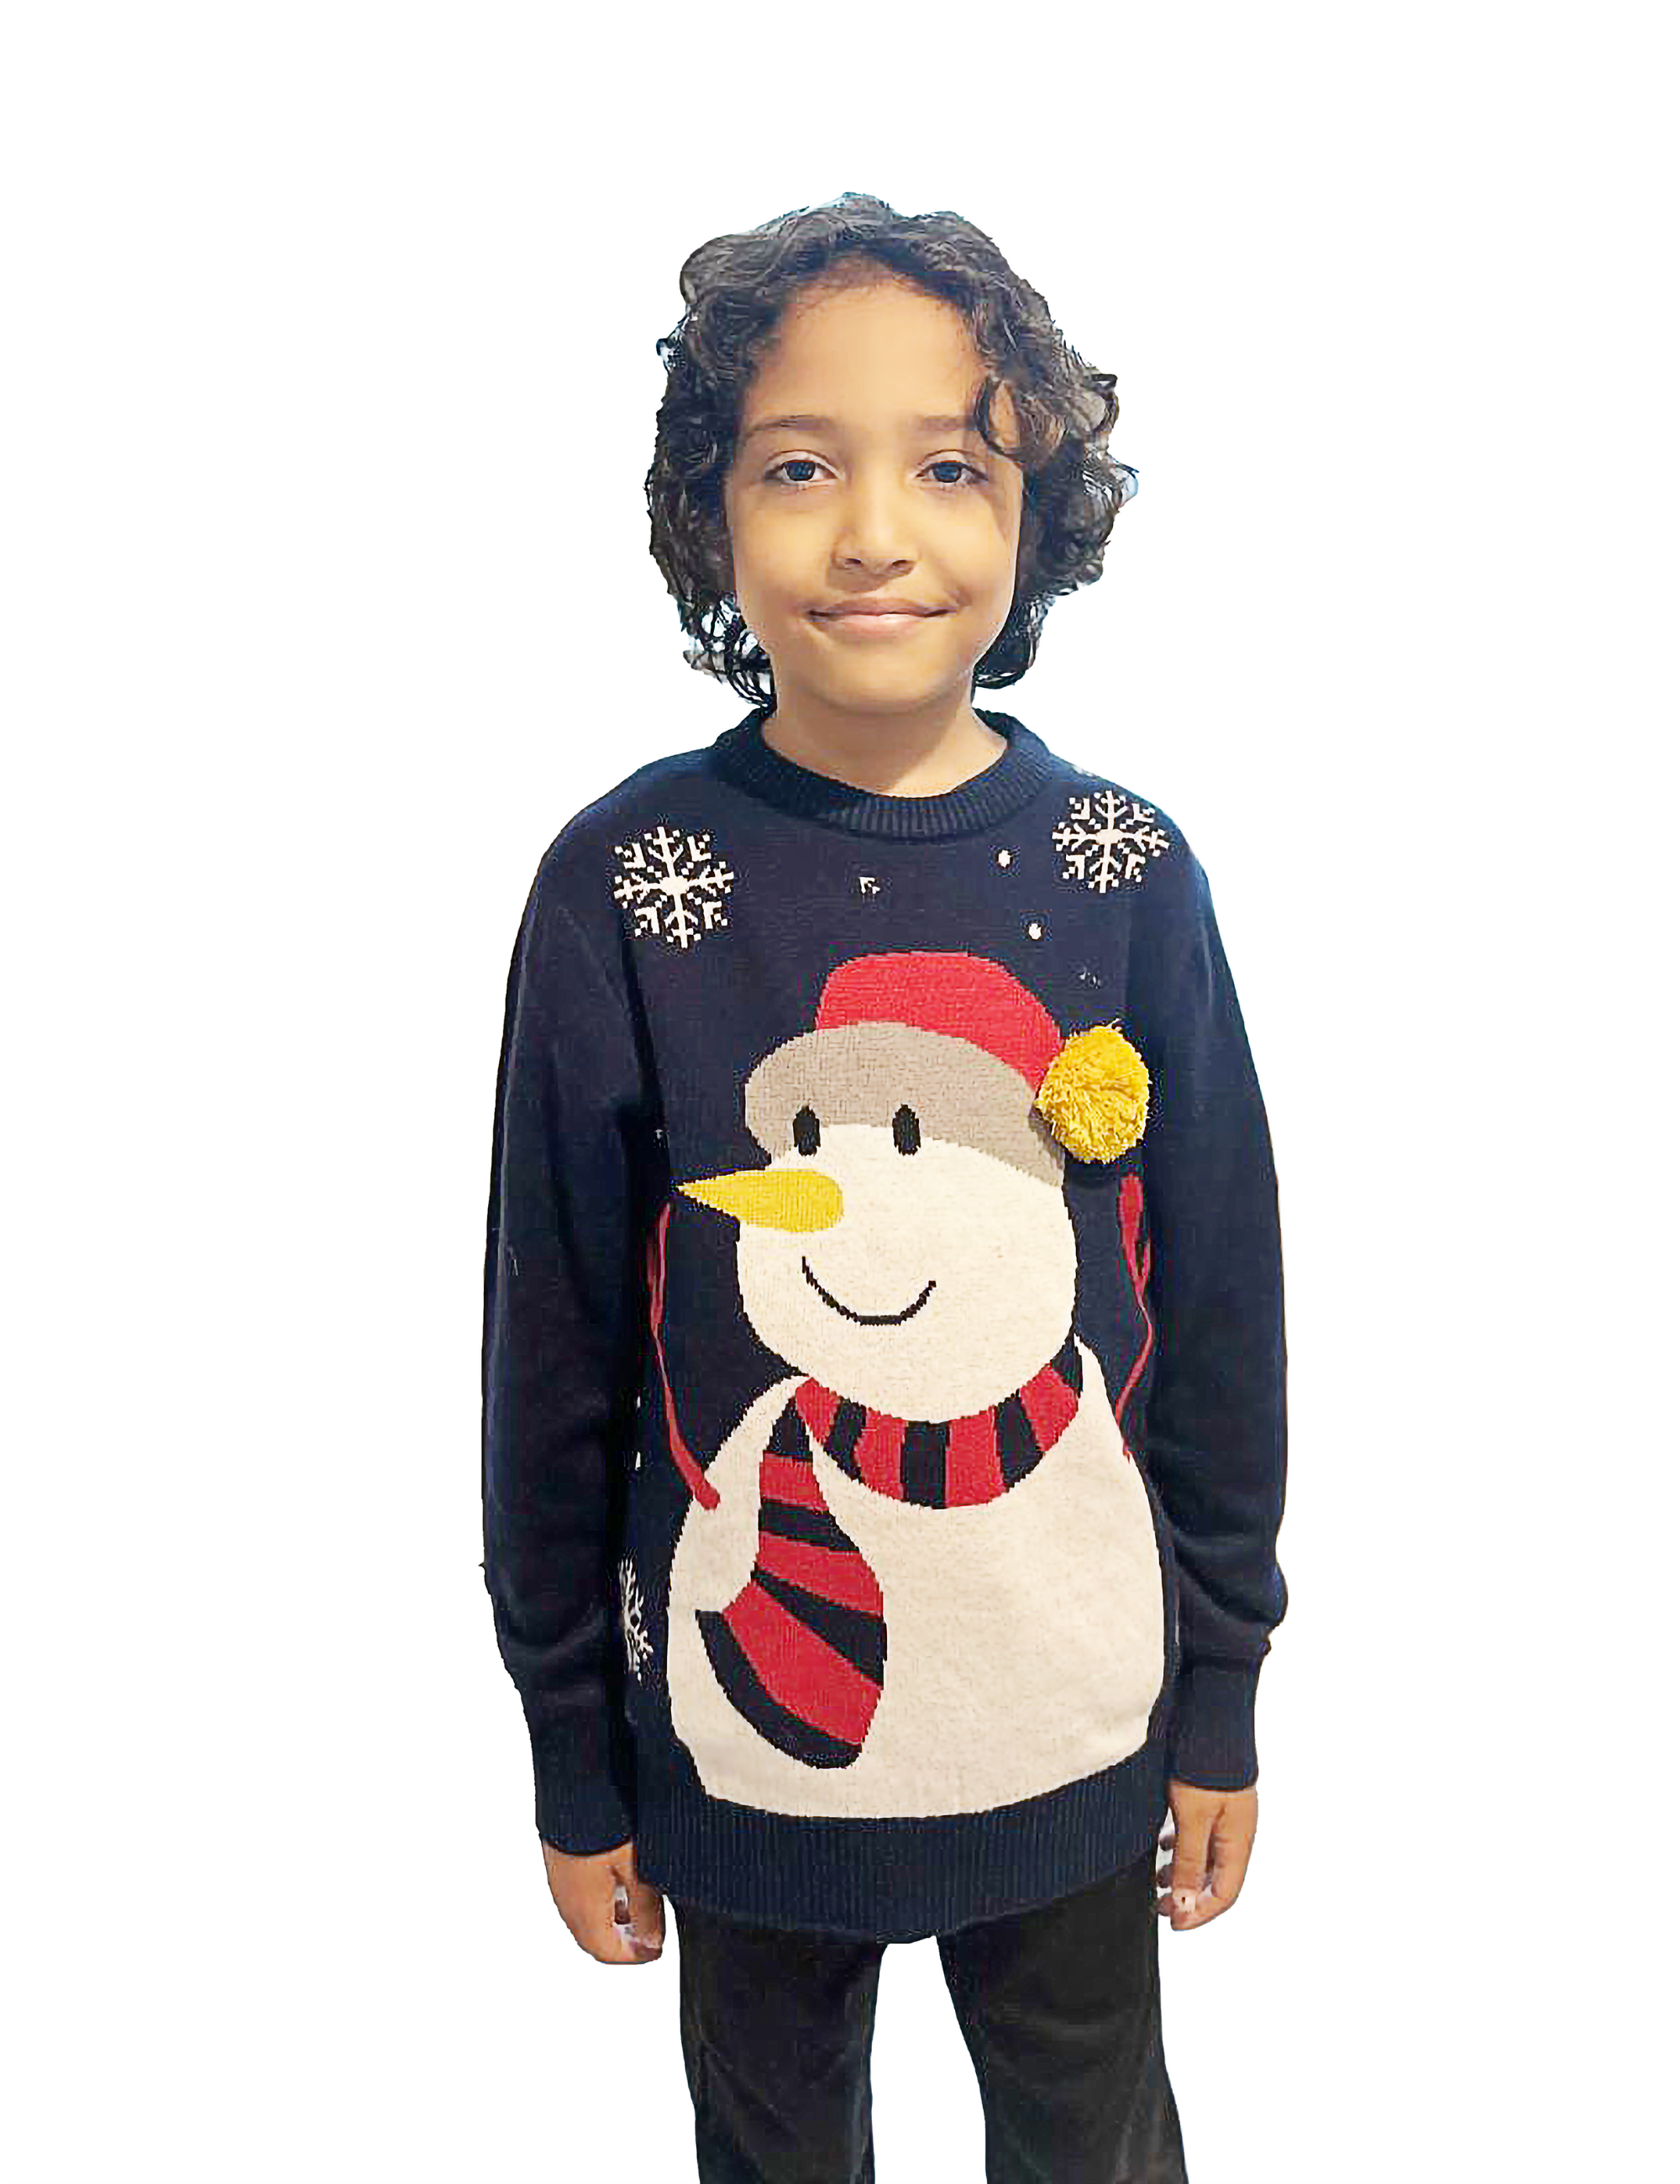 Snowman Sweater With a Pompom